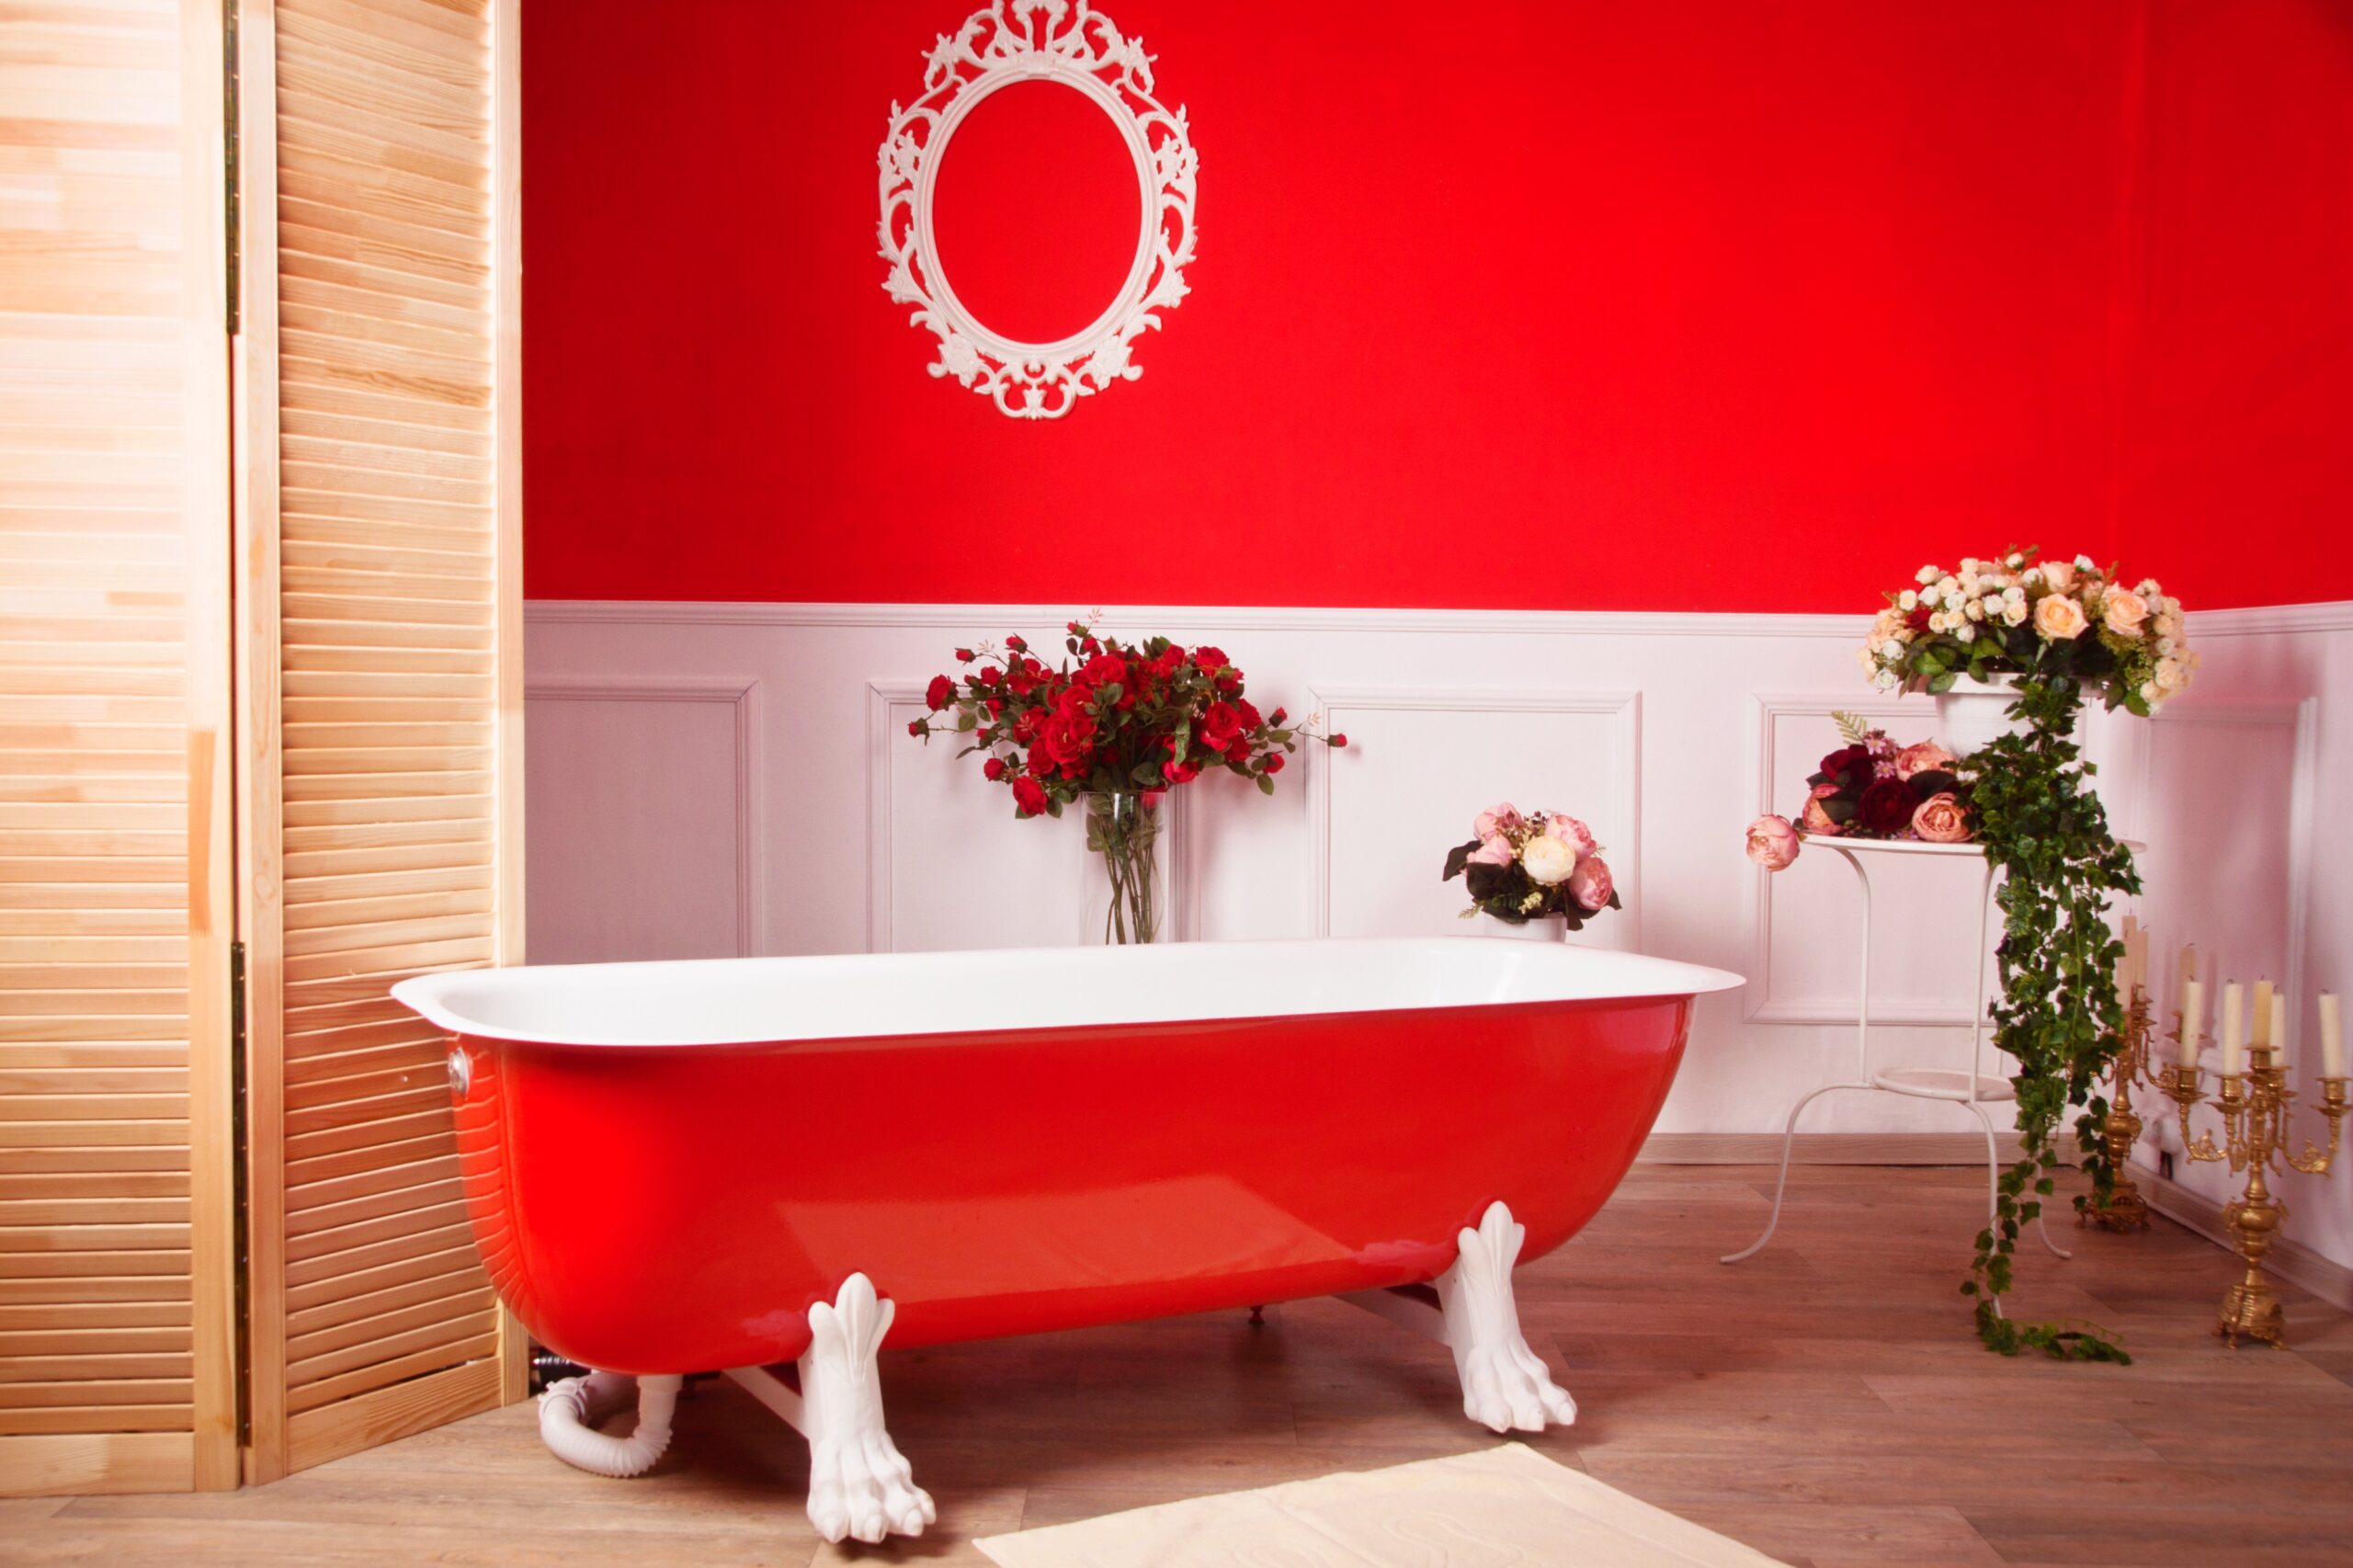 <img src="red.jpg" alt="red retro bath in vintage room"/>